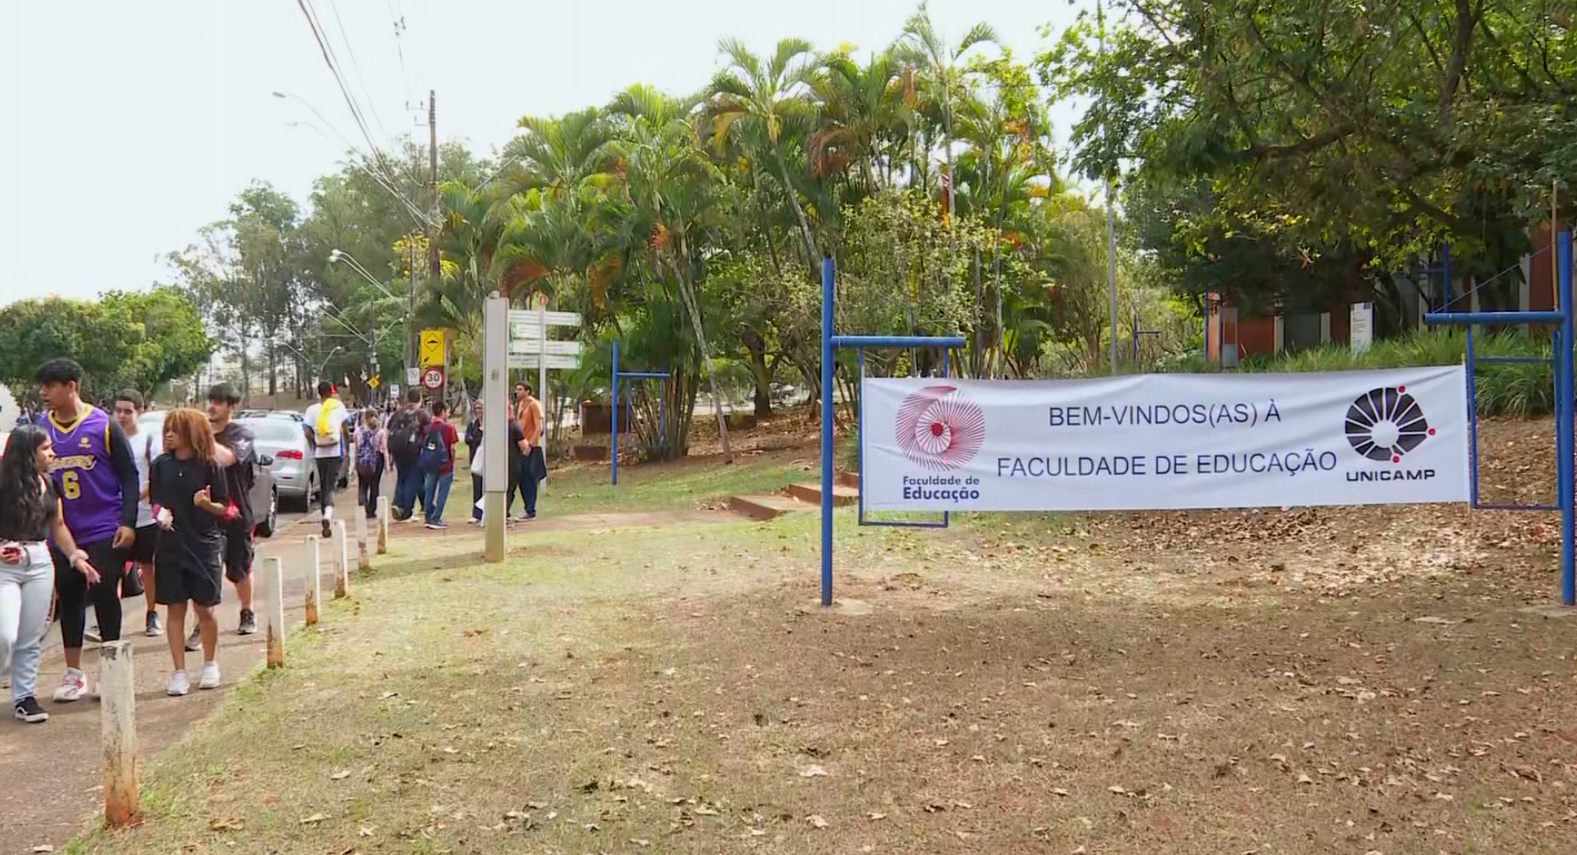 Campus de da Unicamp de Campinas recebe visitantes até as 17h